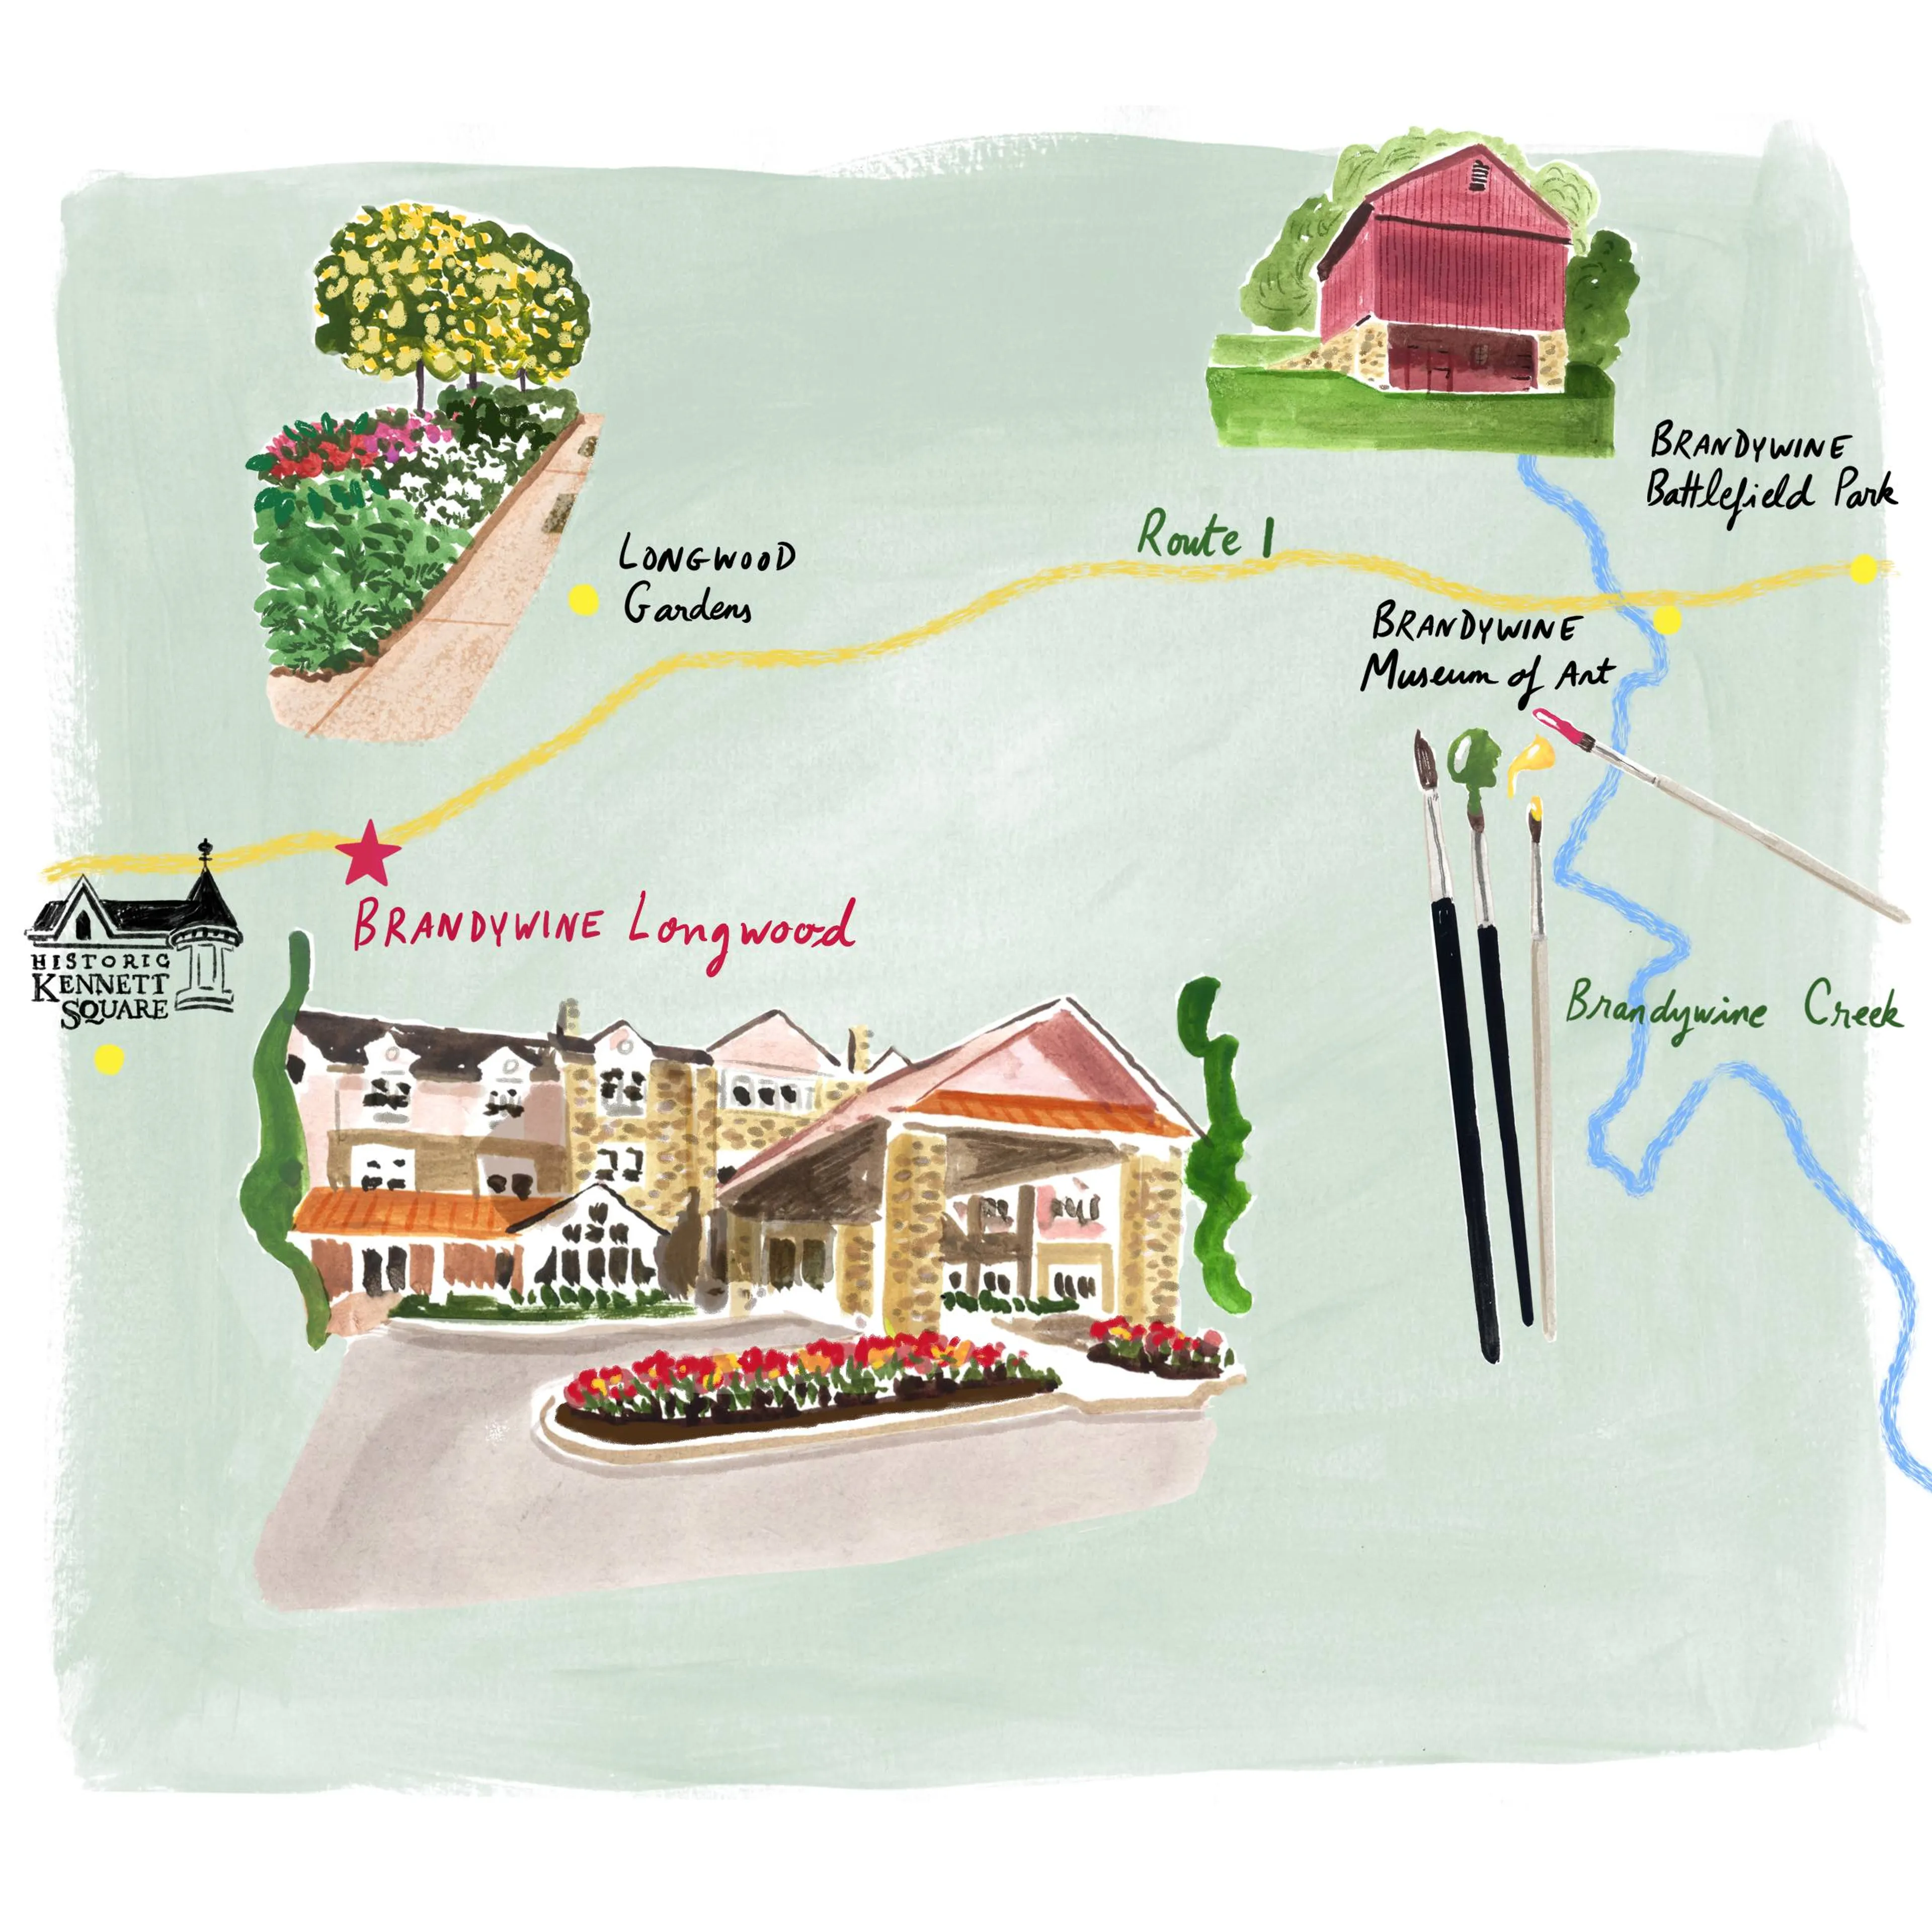 Hand-illustrated map of major roads and landmarks surrounding Brandywine Longwood in Kennett Square, PA